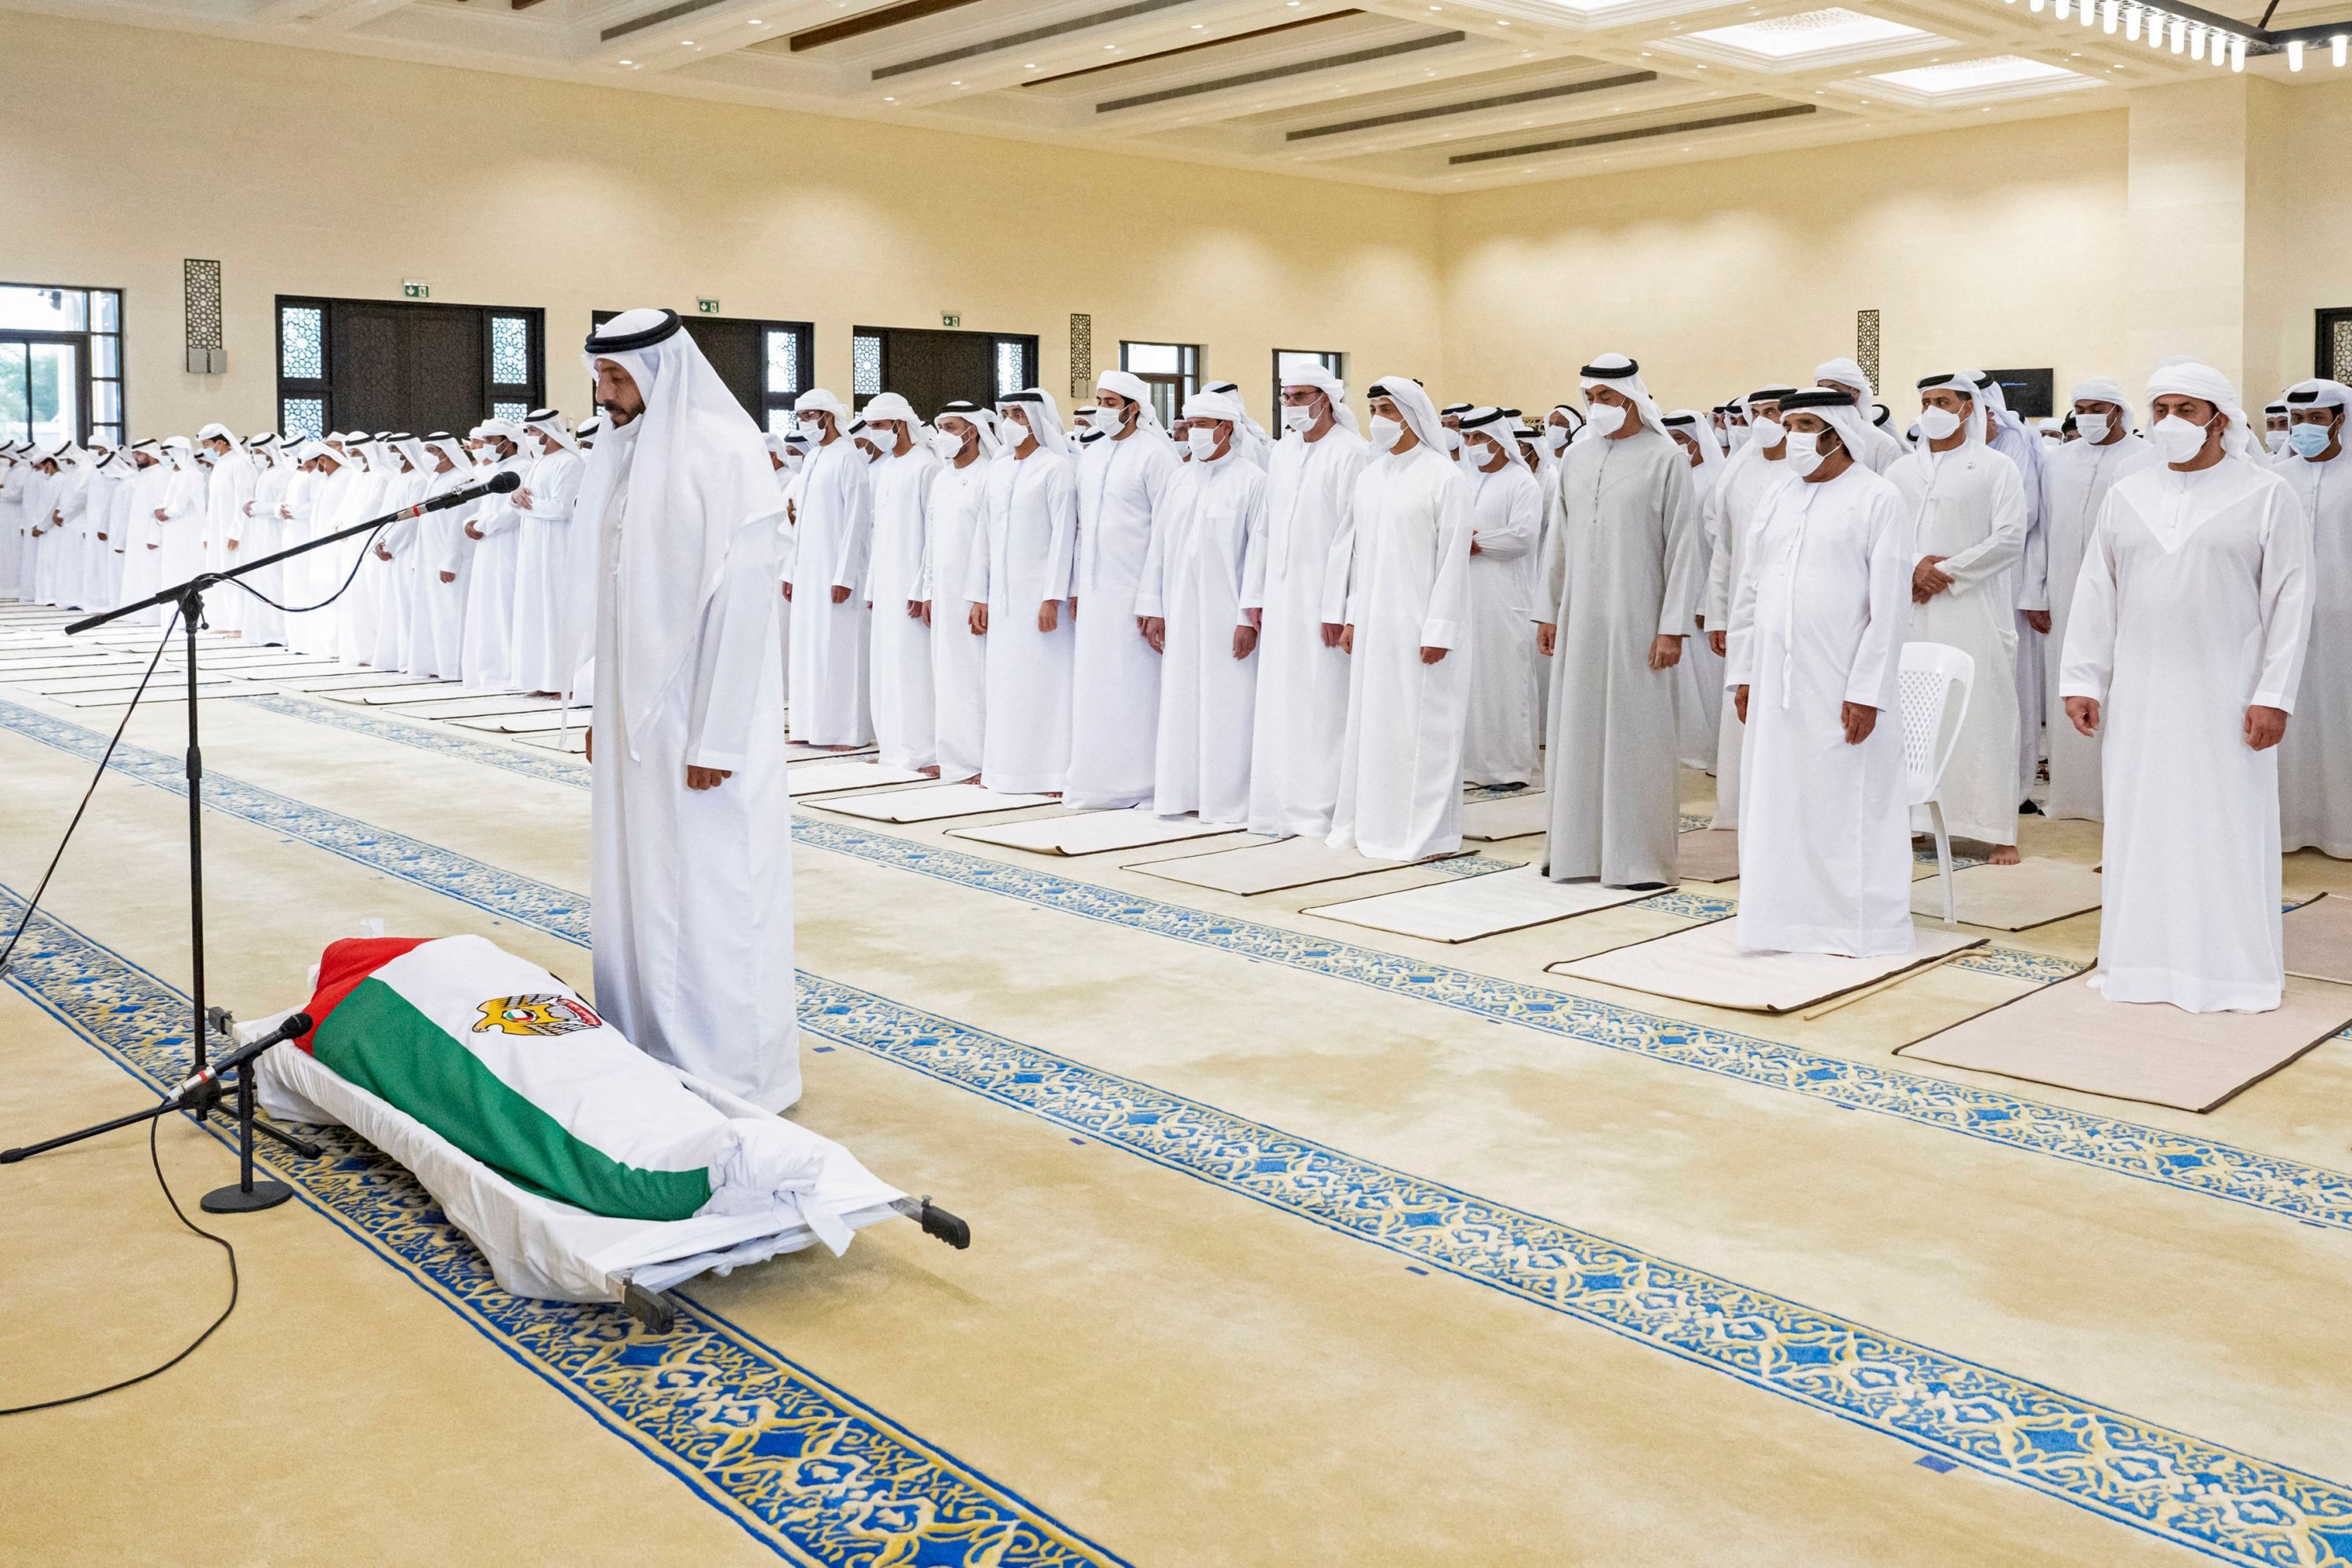 Sebuah gambar selebaran yang dirilis oleh Kementerian Urusan Kepresidenan UEA menunjukkan Mohamed bin Zayed al-Nahyan (kanan), Putra Mahkota Abu Dhabi dan Wakil Panglima Tertinggi Angkatan Bersenjata UEA, mengambil bagian dalam doa pemakaman untuk mendiang Presiden UEA Sheikh Khalifa bin Zayed Al-Nahyan di sebuah masjid di Abu Dhabi pada 13 Mei 2022. (Foto oleh Hamad al-Kaabi / Kementerian Kepresidenan / AFP) /